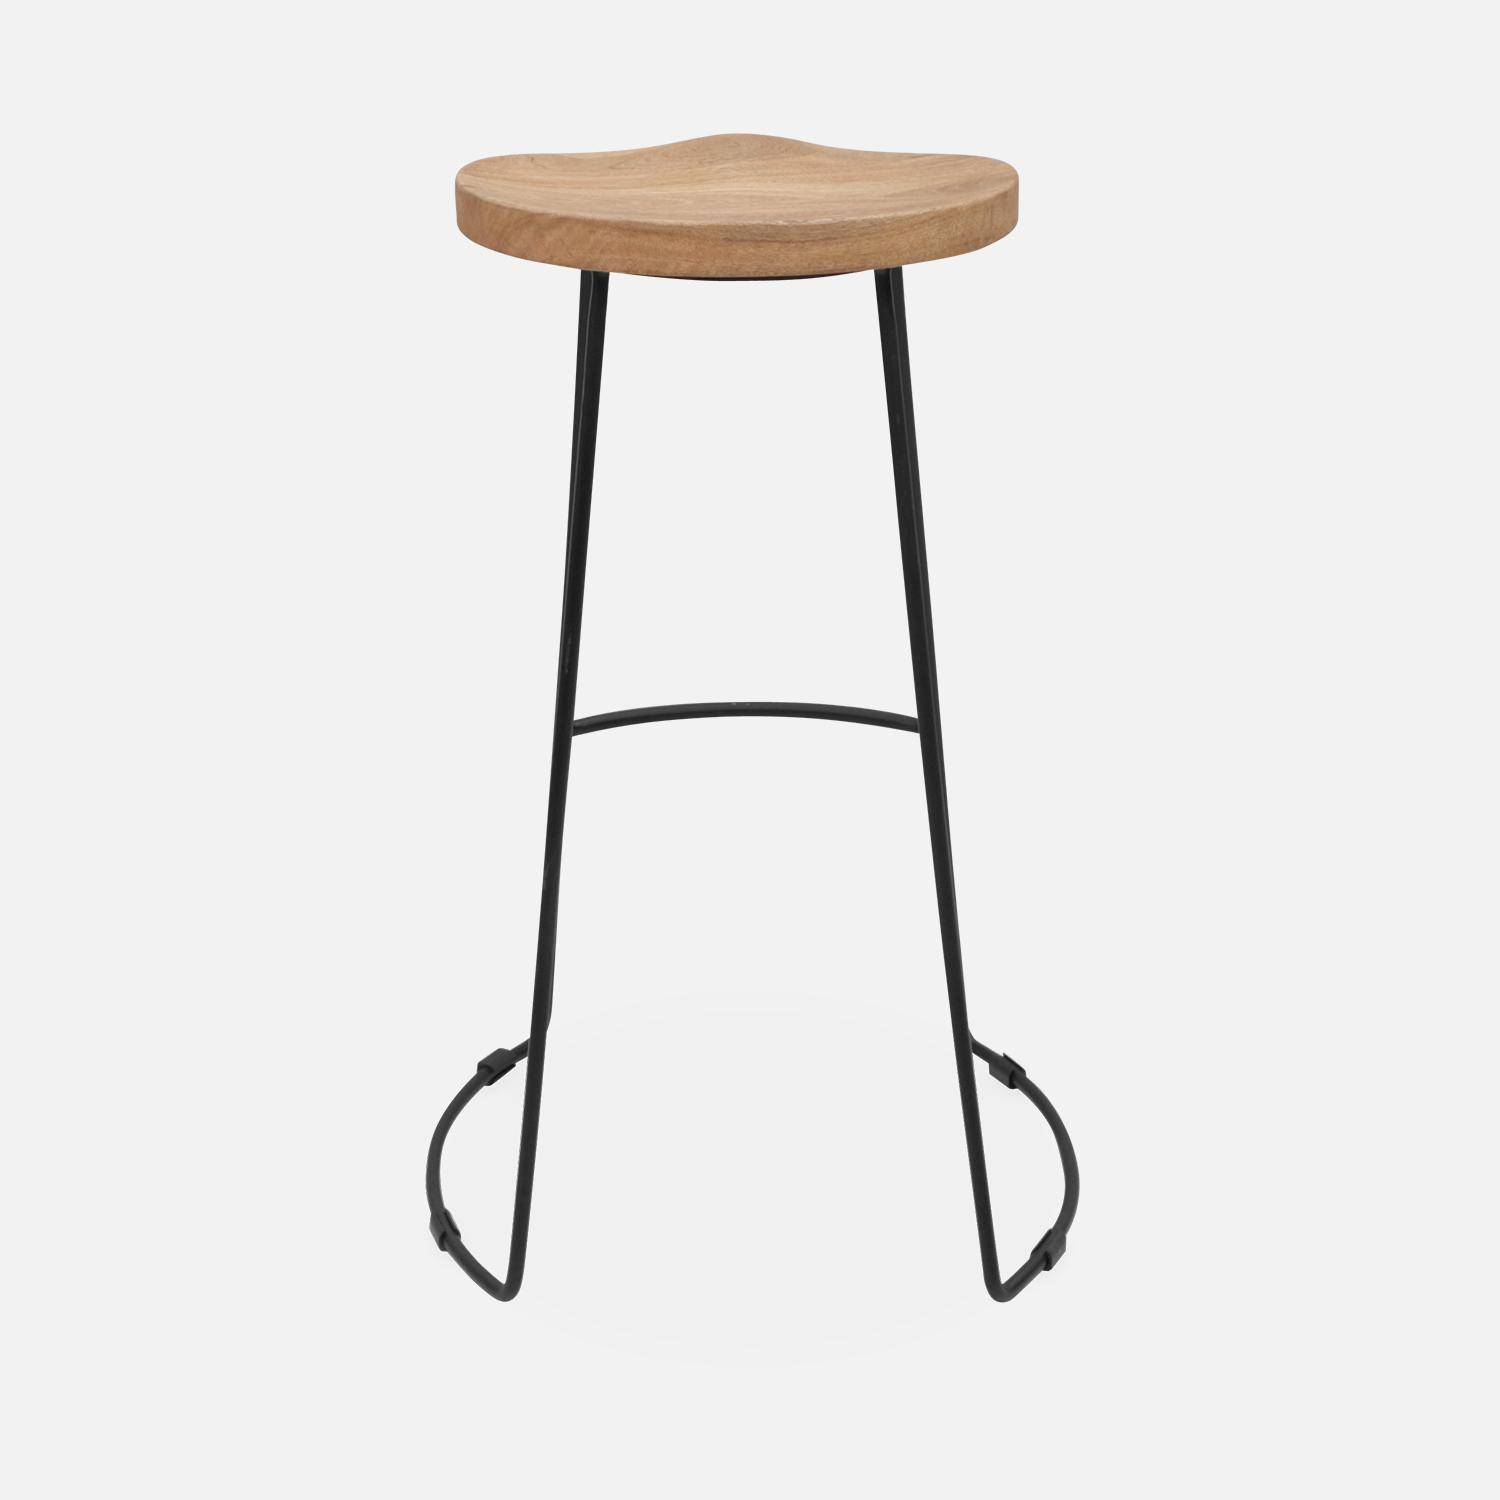 Set of 4 industrial metal and wooden bar stools, 47x40x75cm, Jaya, Mango wood seat, black metal legs,sweeek,Photo6